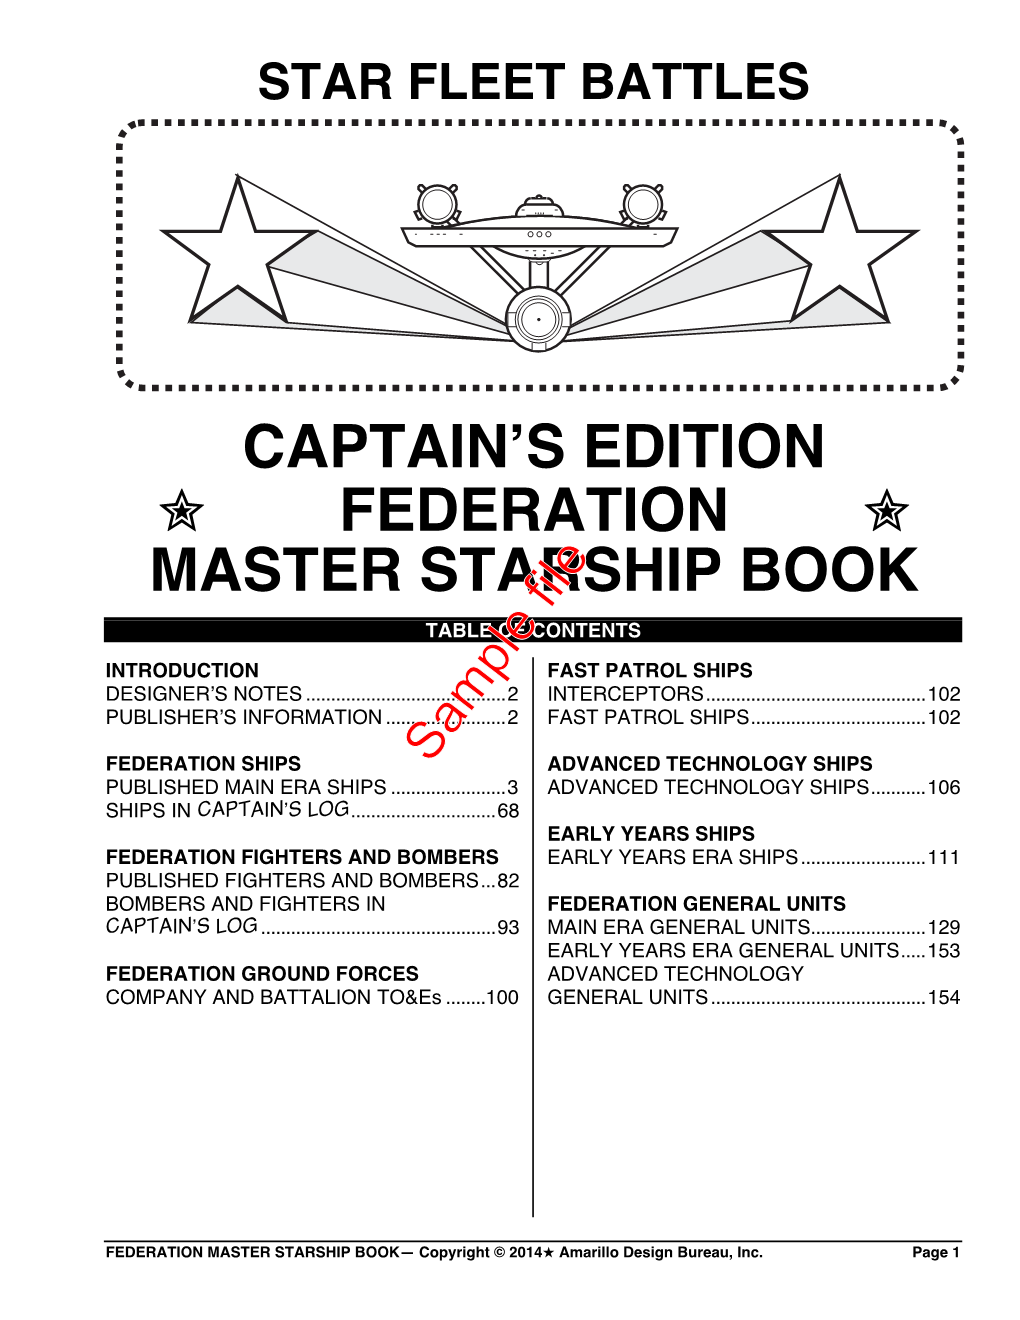 Captain's Edition Federation Master Starship Book